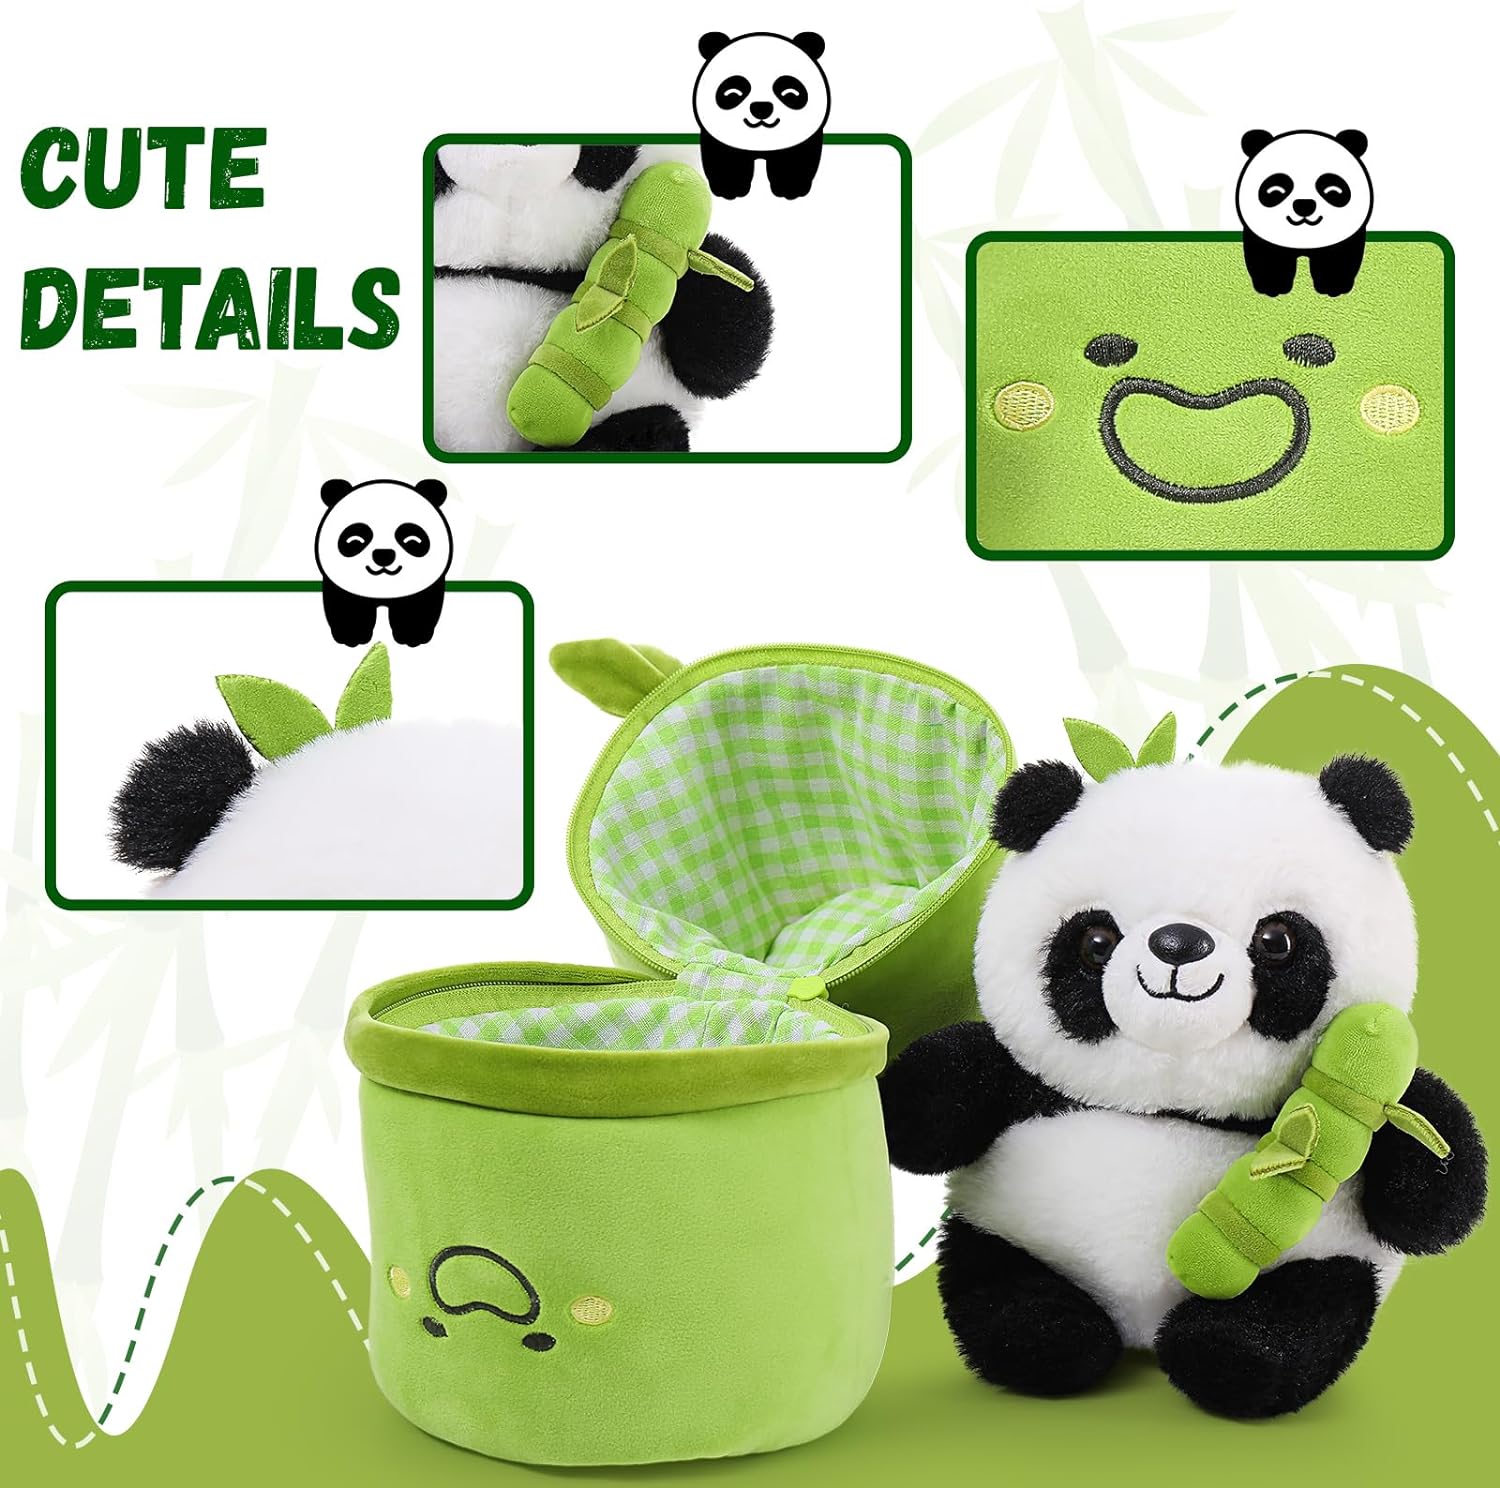 Panda Bamboo Plush Toy Set, 9.8 Inches